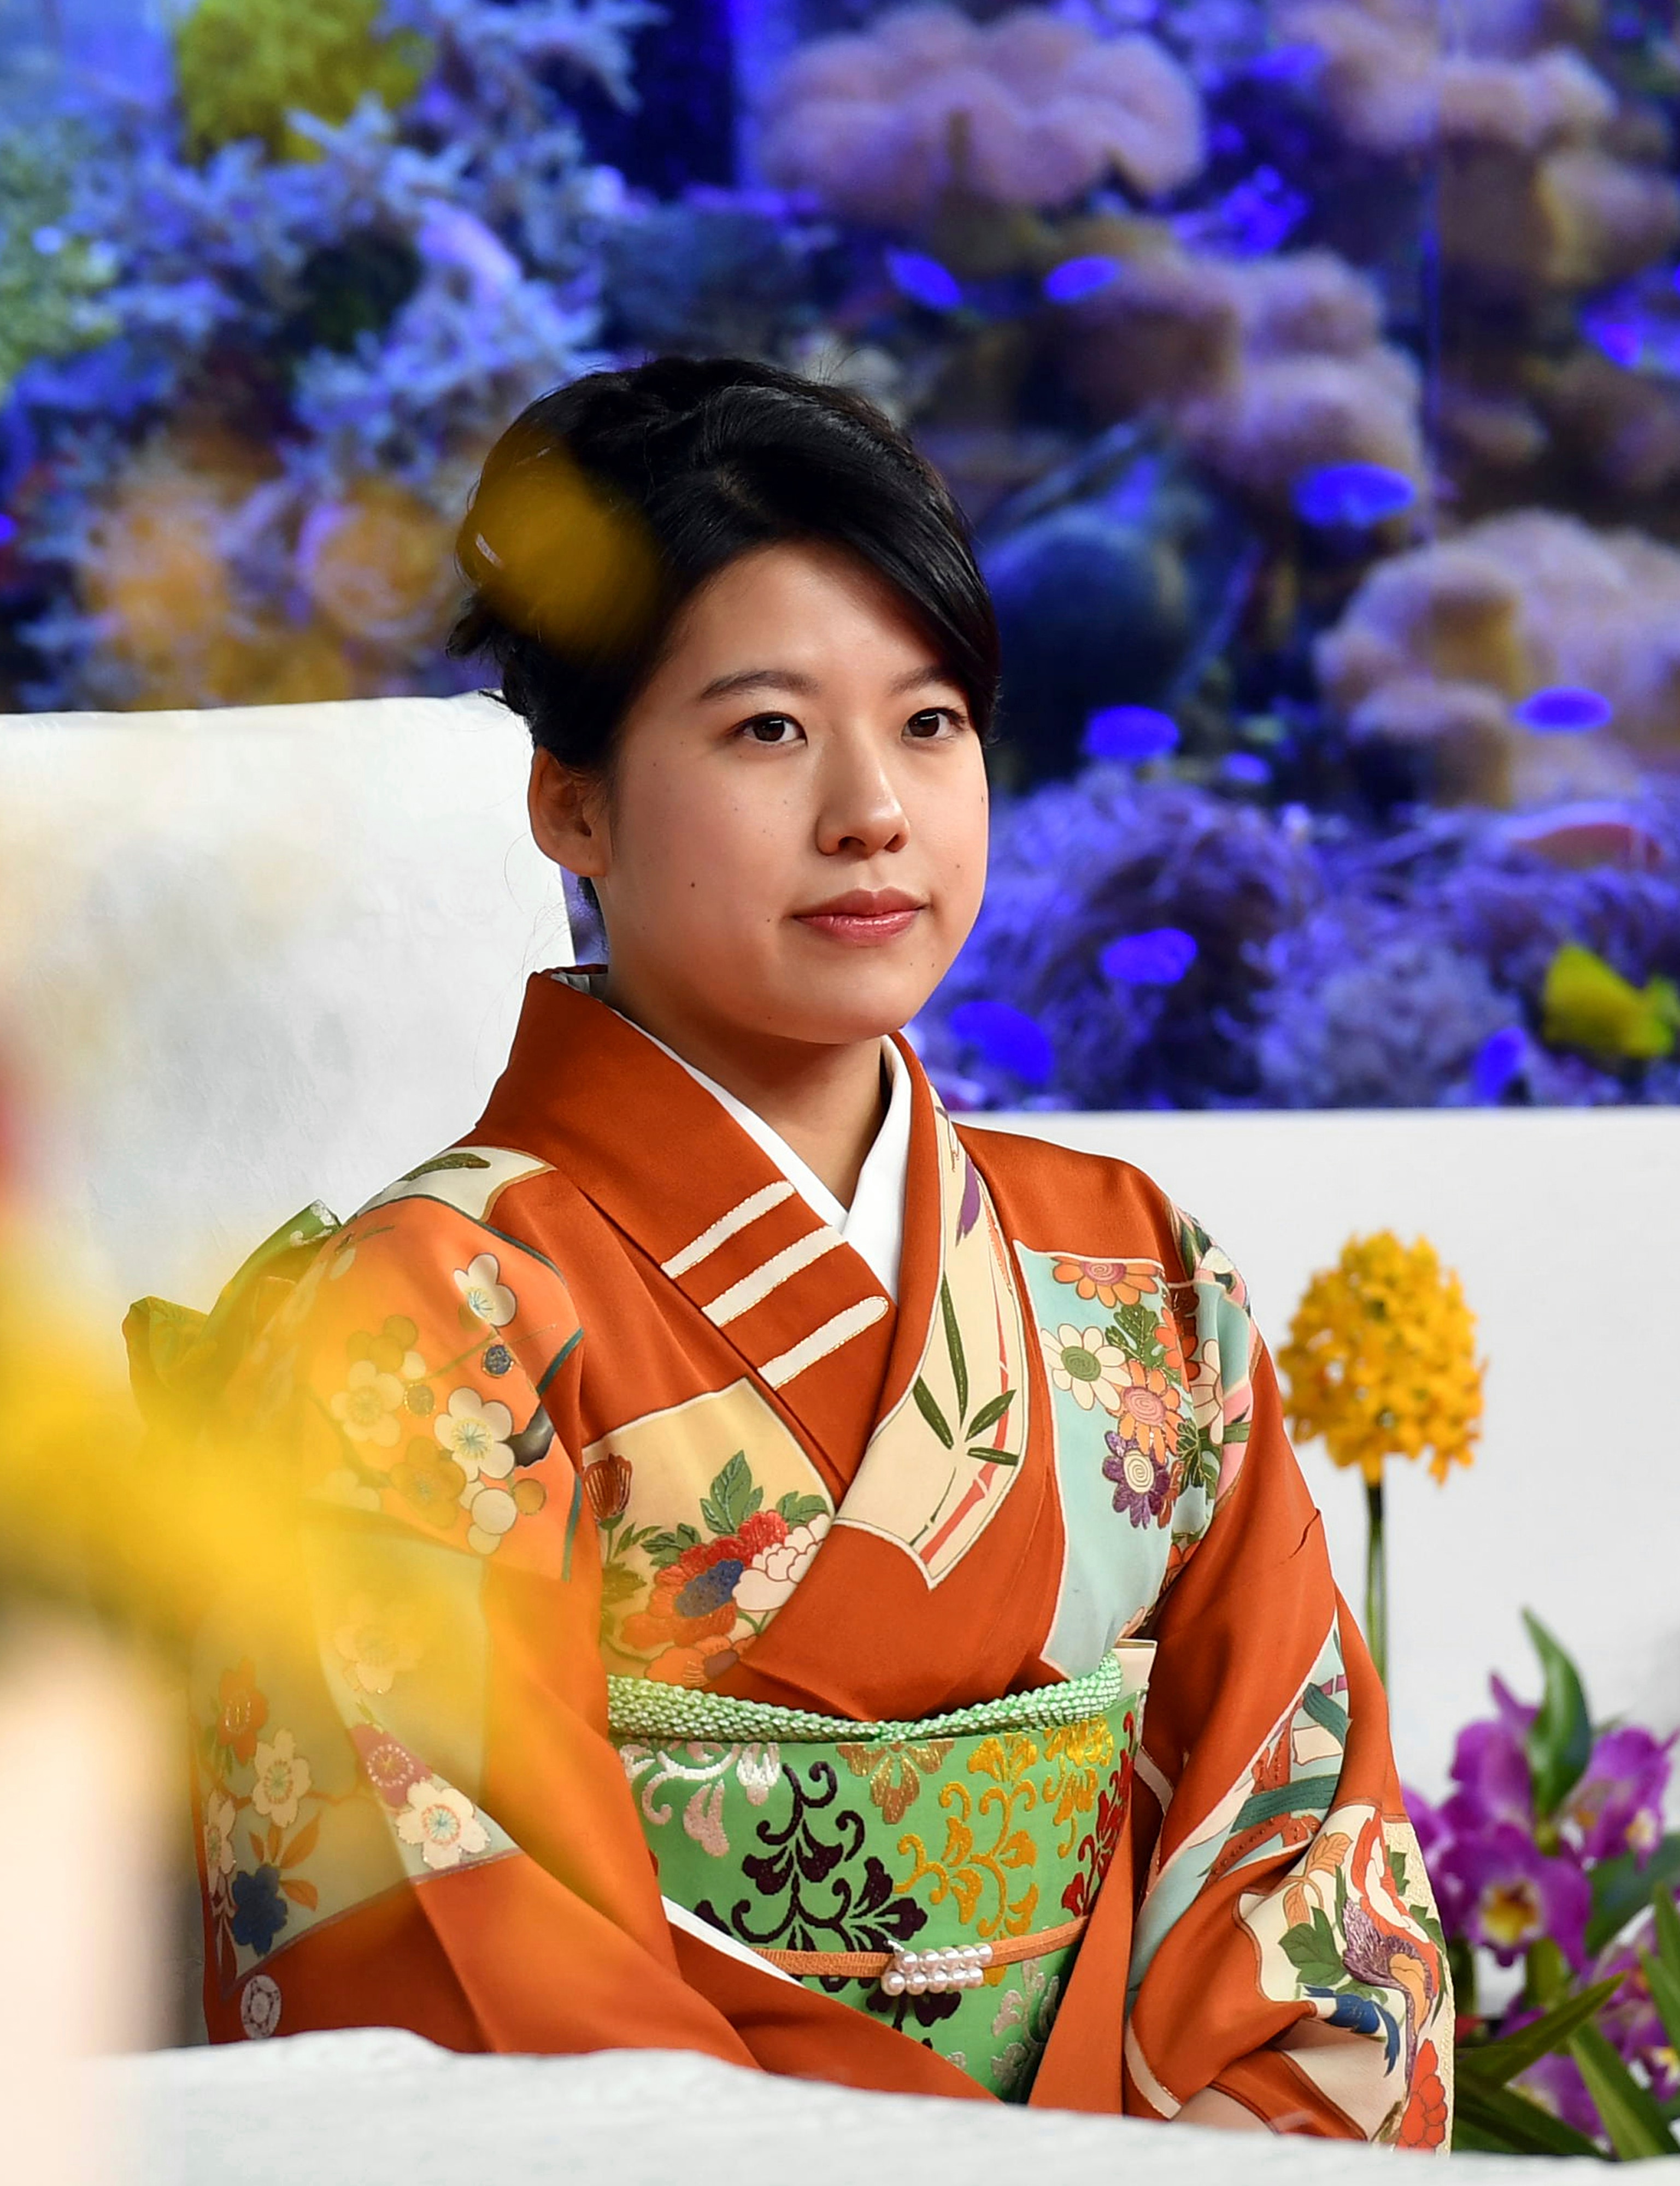 Japanese Princess Ayako renounces royal status to marry a 'commoner